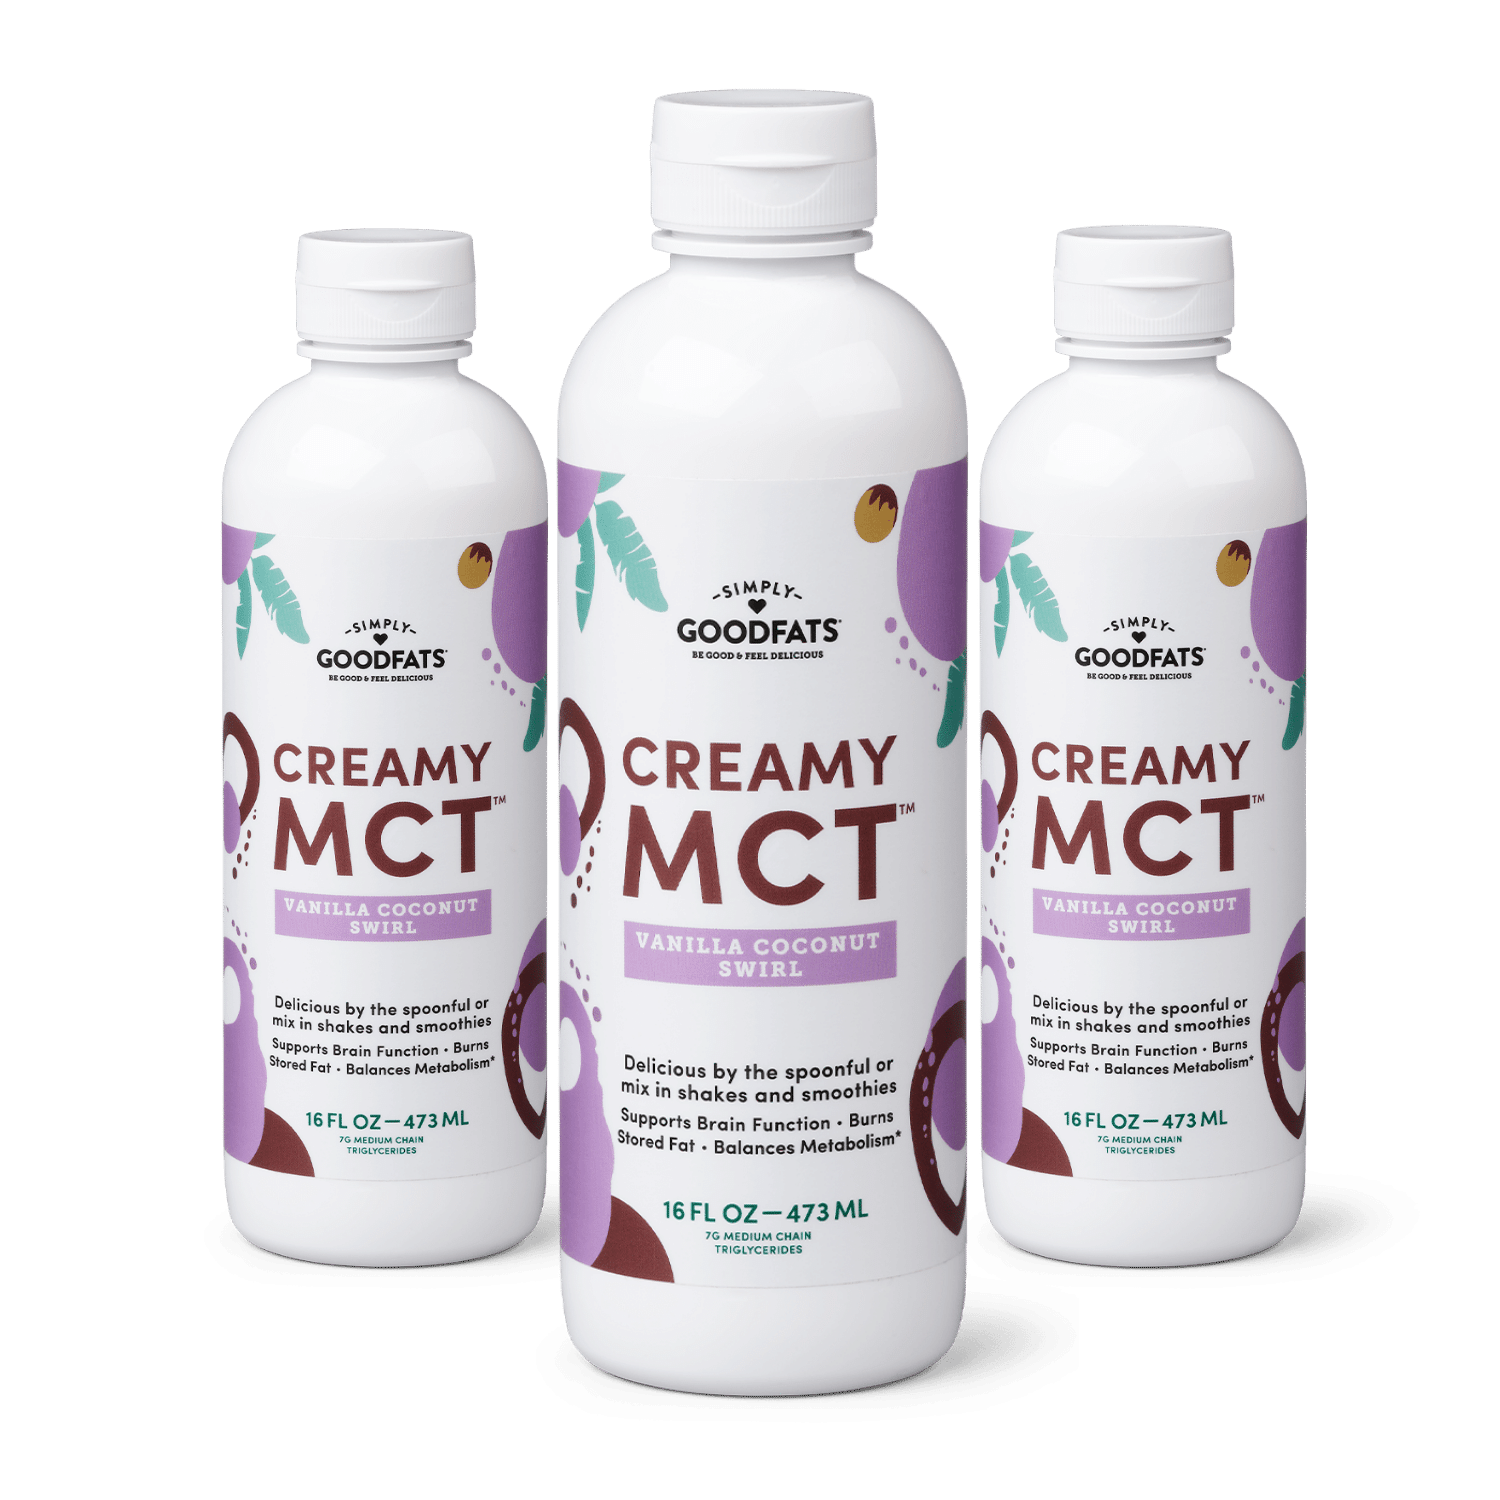 Creamy MCT Vanilla Coconut Swirl 90-Day Supply